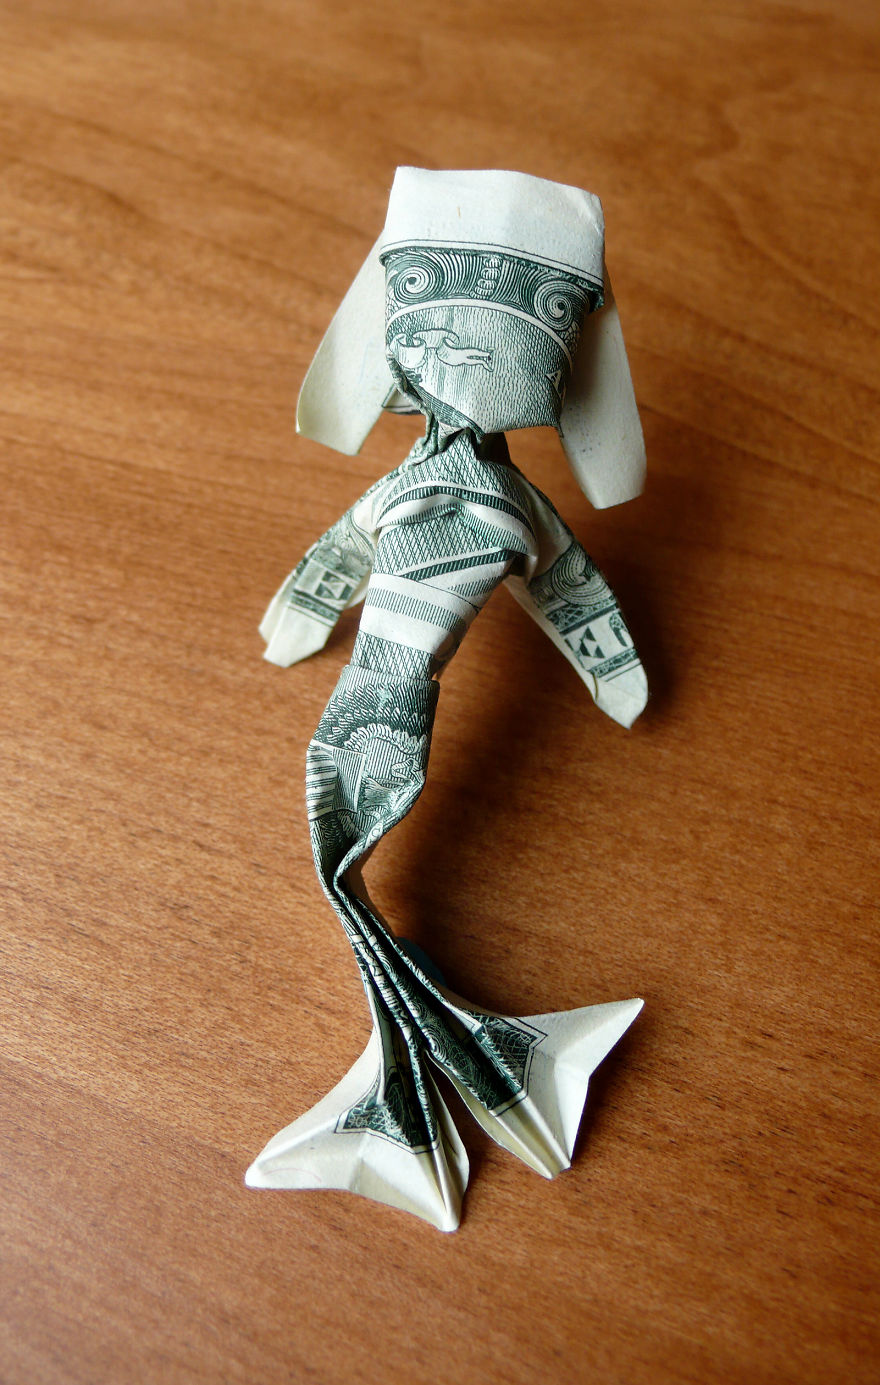 Dollar Bill Origami By CraigFoldsFives Bored Panda